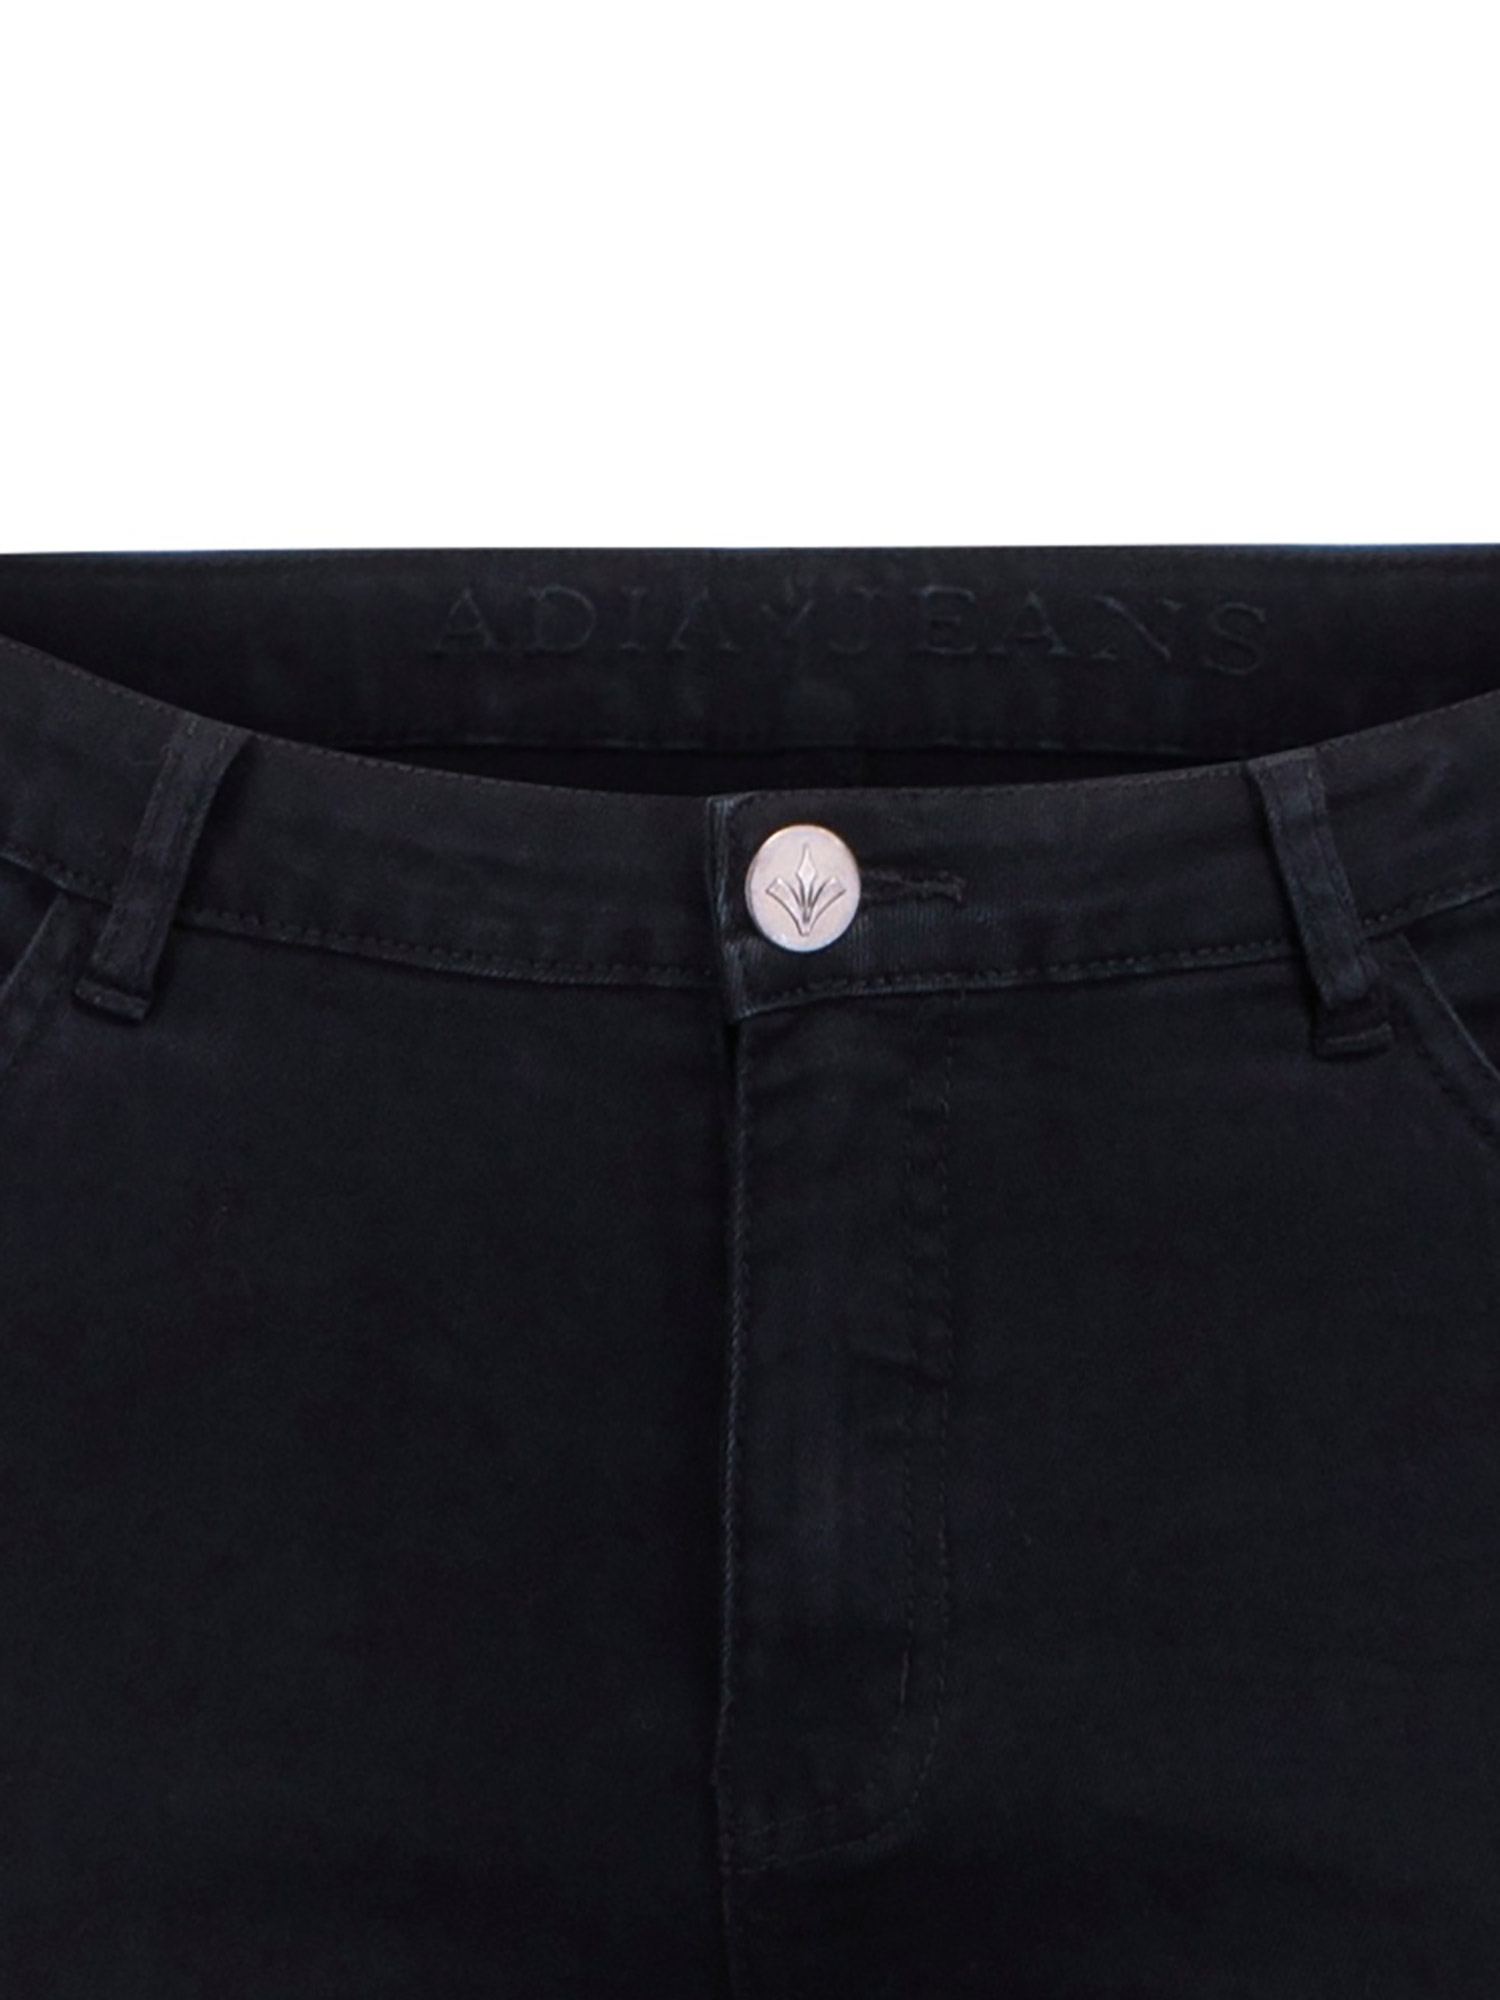 MILAN - Svarta stretchiga jeans fra Adia